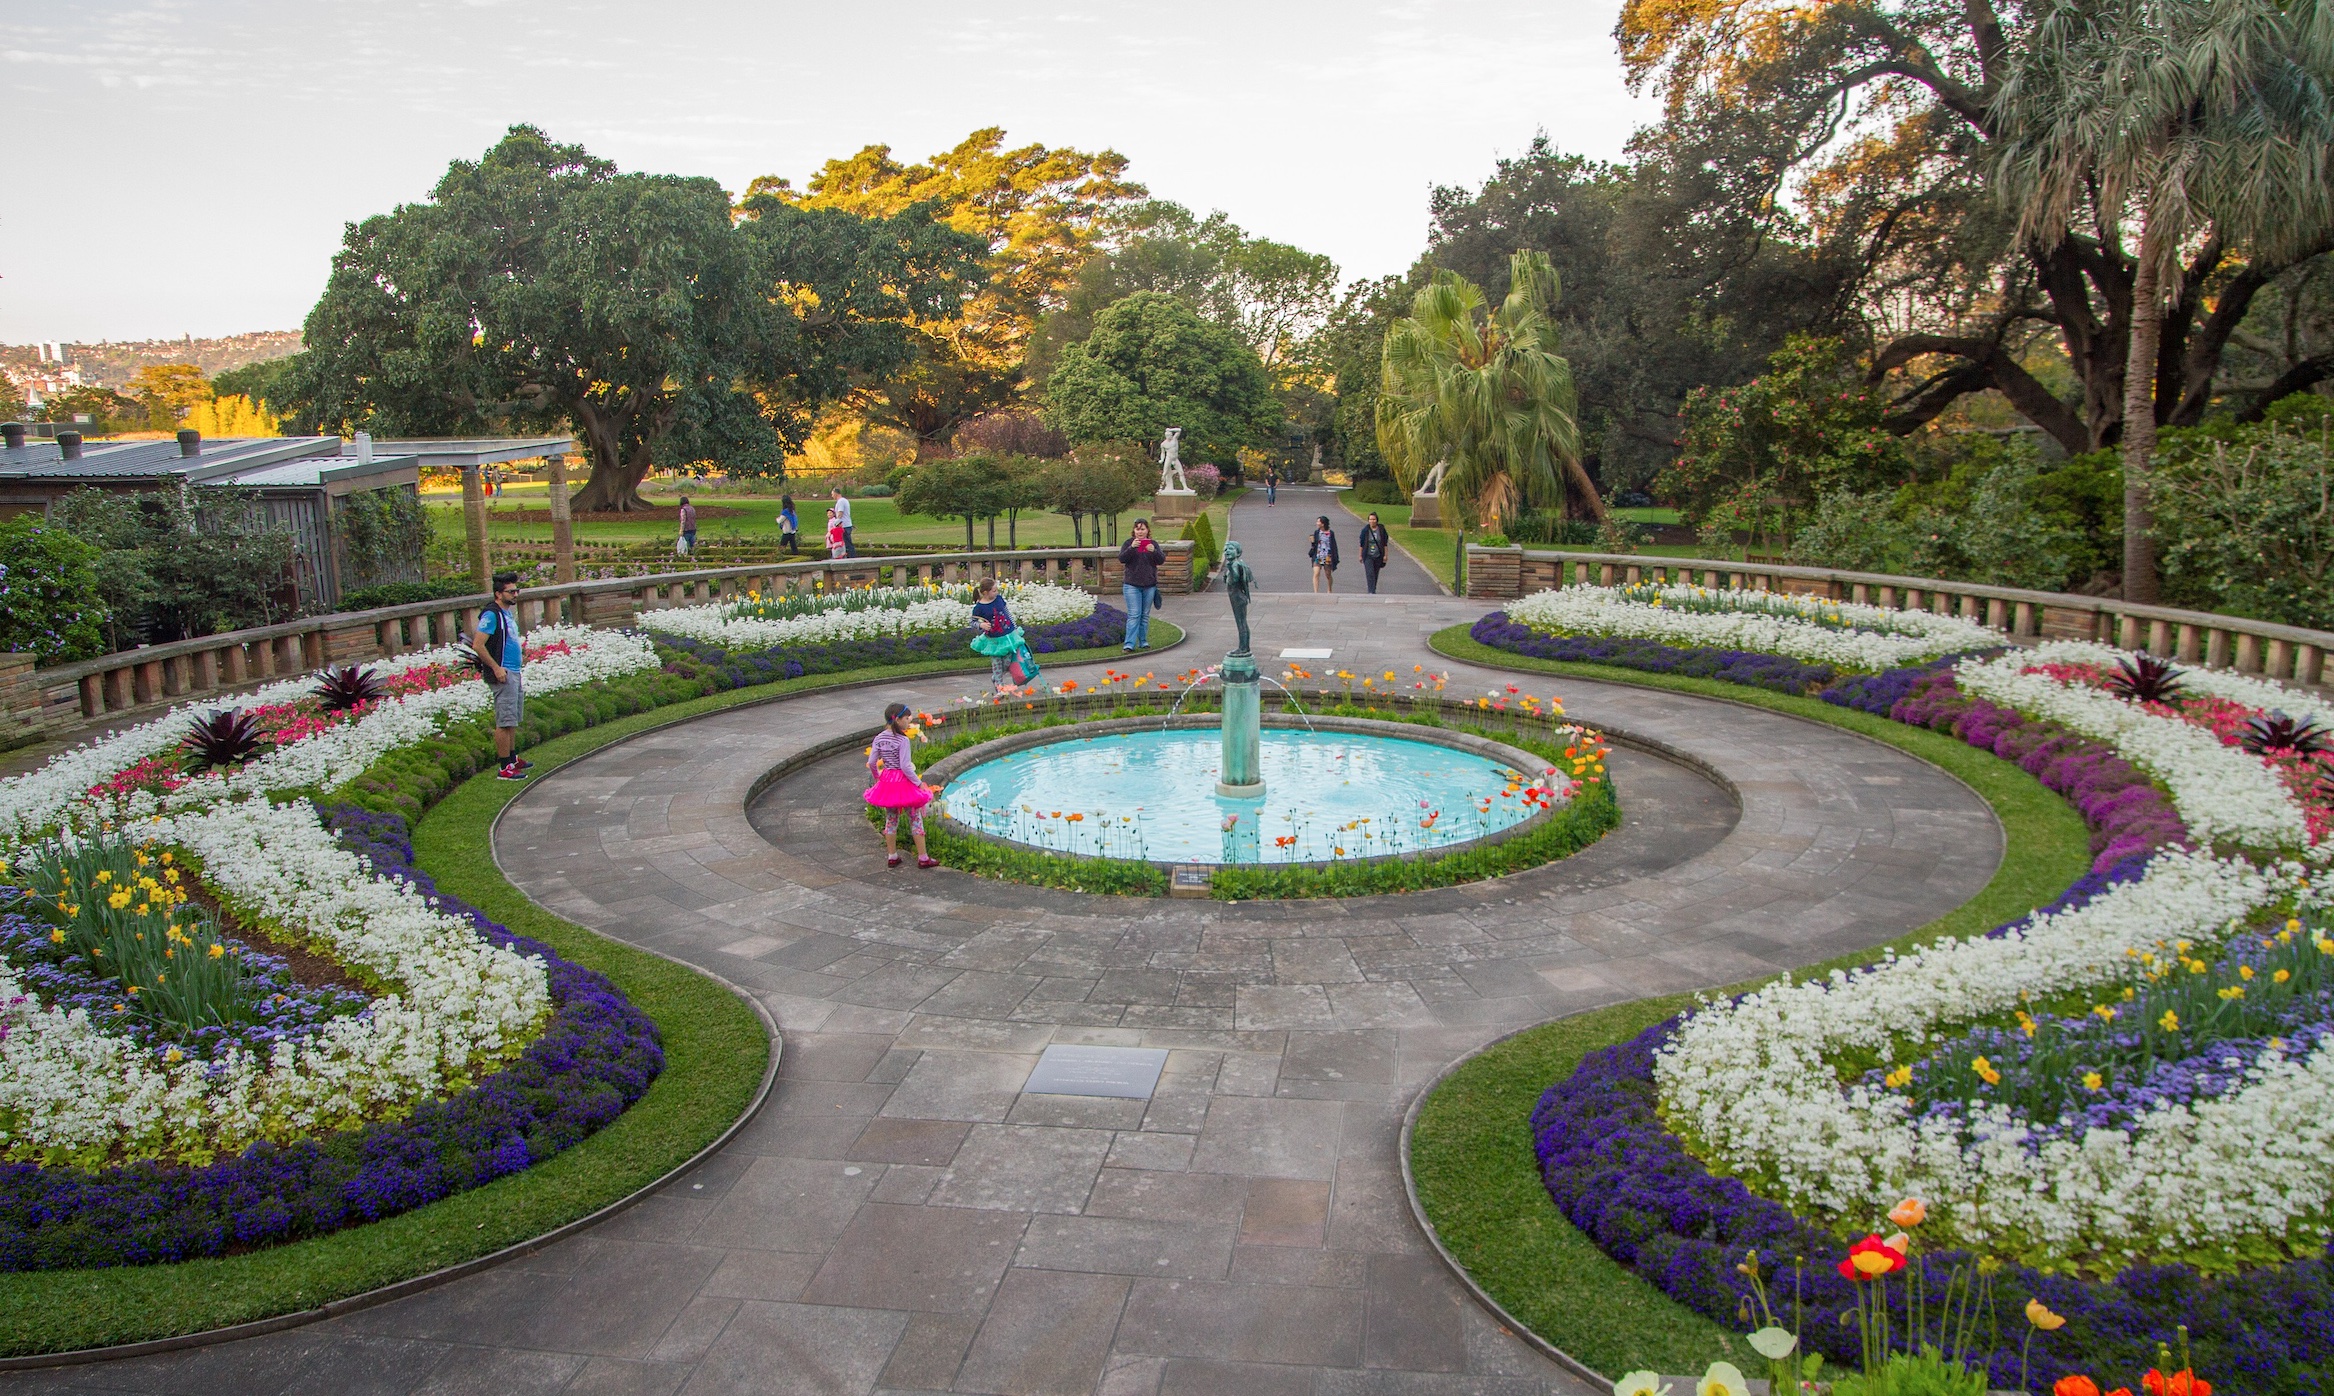 Royal Botanic Gardens, Sydney, Australia; image by Maksym Kozlenko, CC BY-SA 4.0, via Wikimedia Commons.